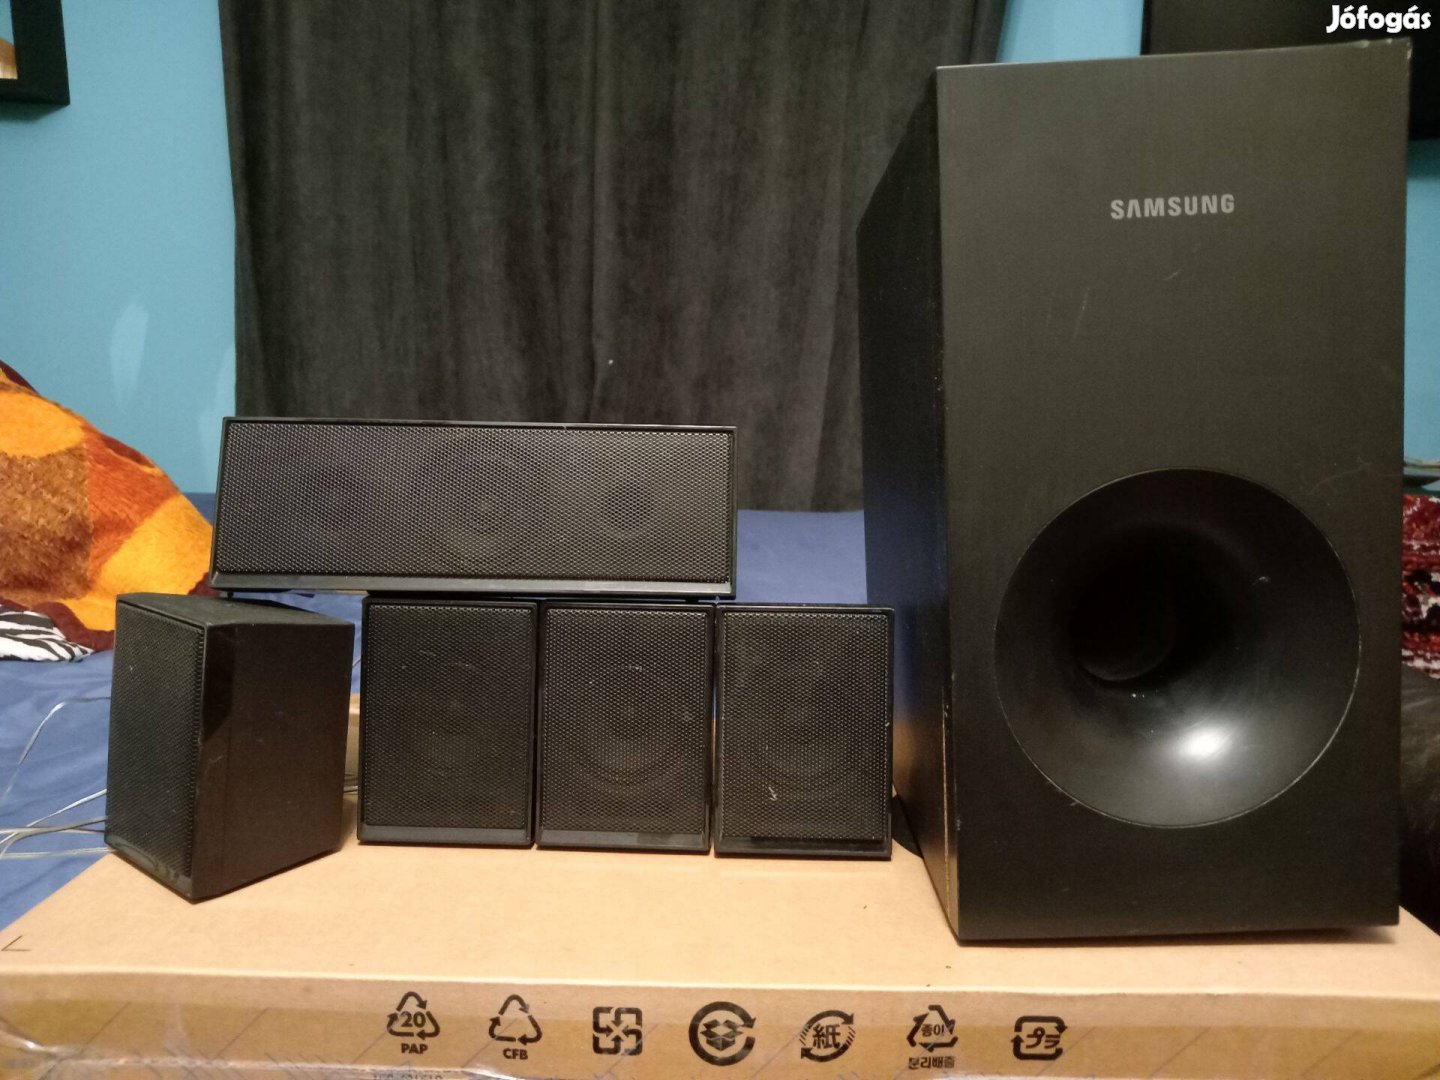 Samsung 5.1 házimozi hangfalak eladók